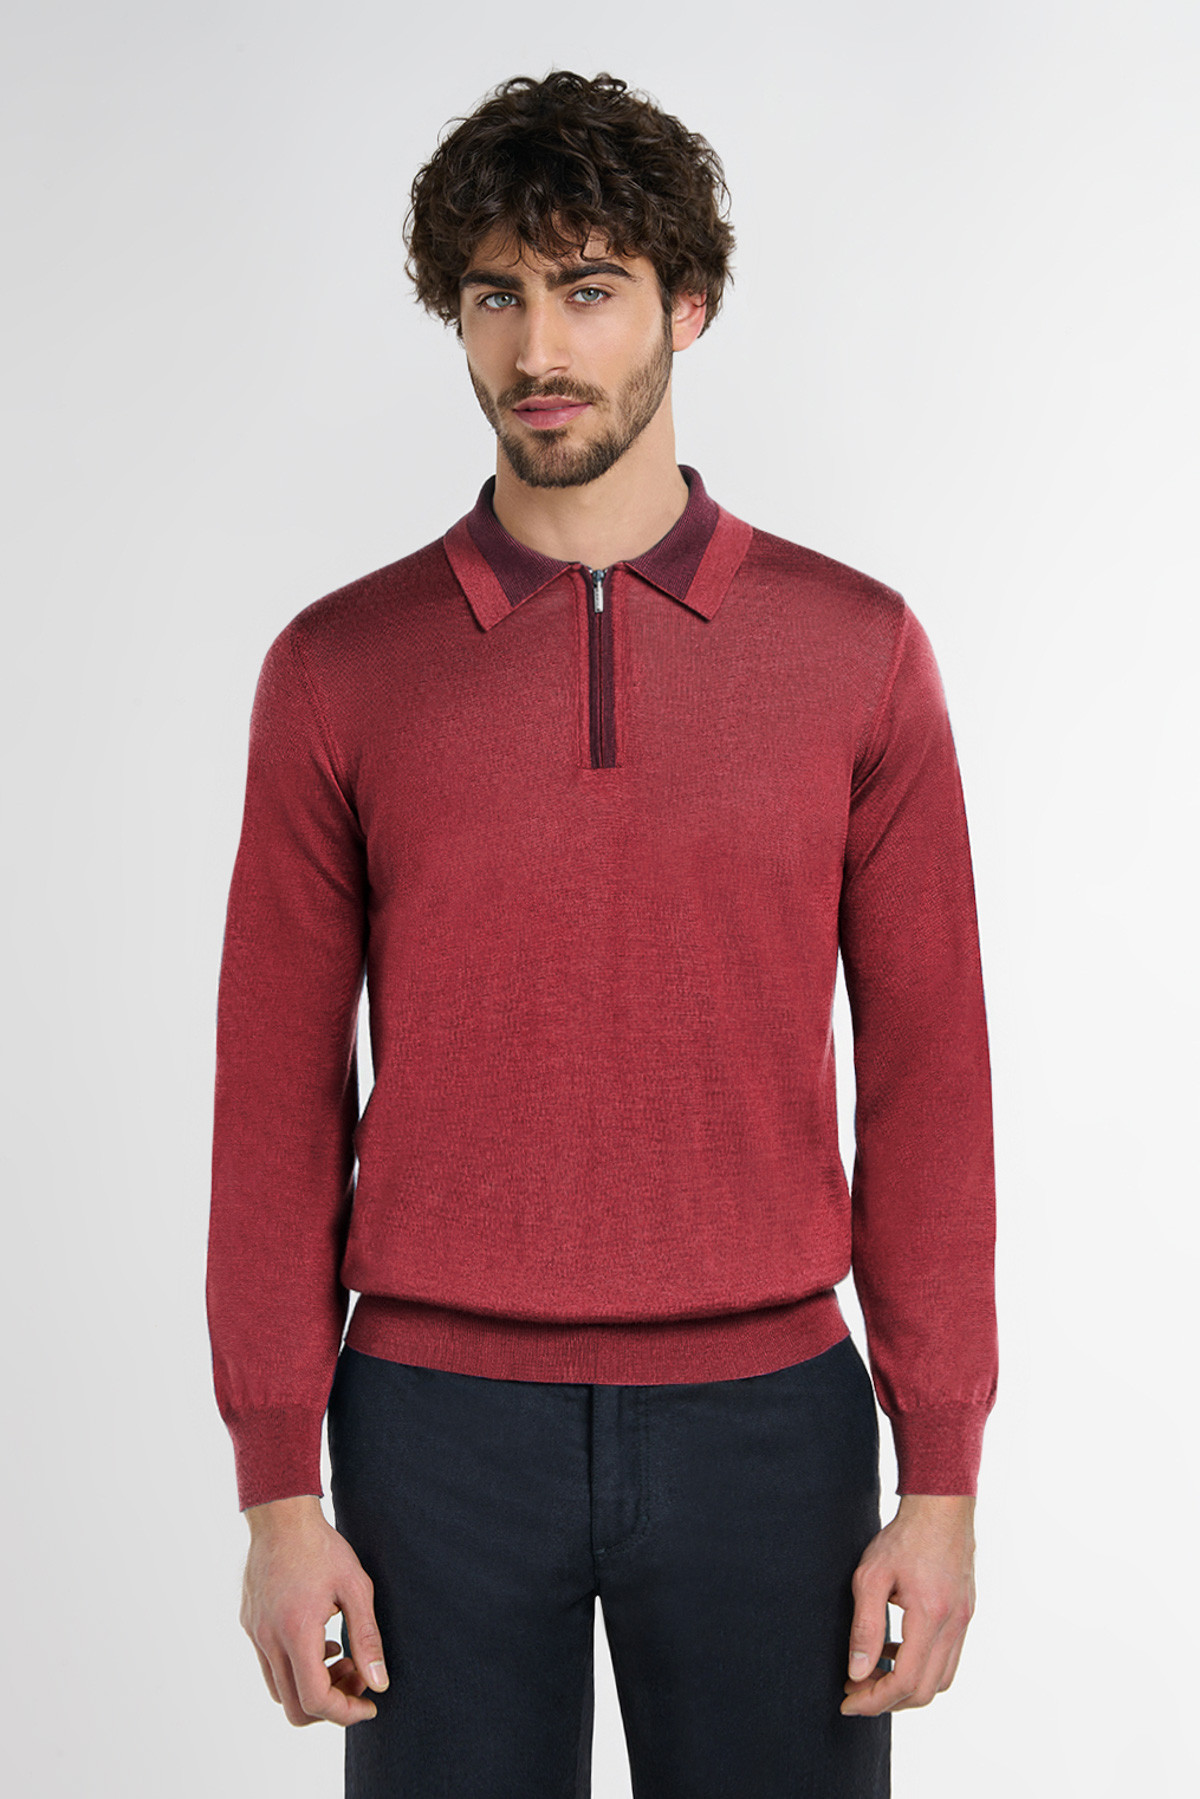 Burgundy red zipped polo shirt, long sleeves